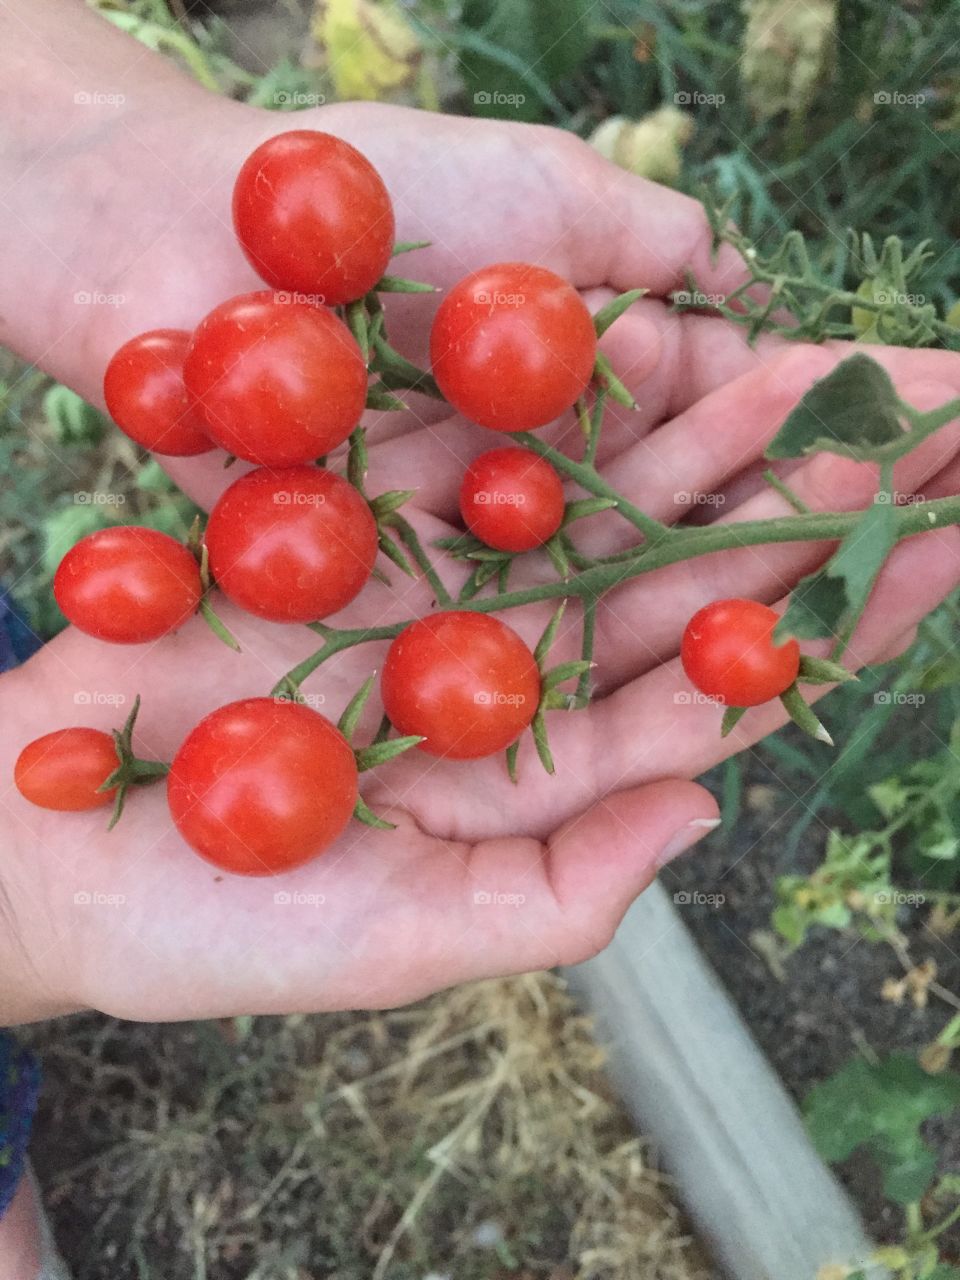 Vine ripened tomatoes